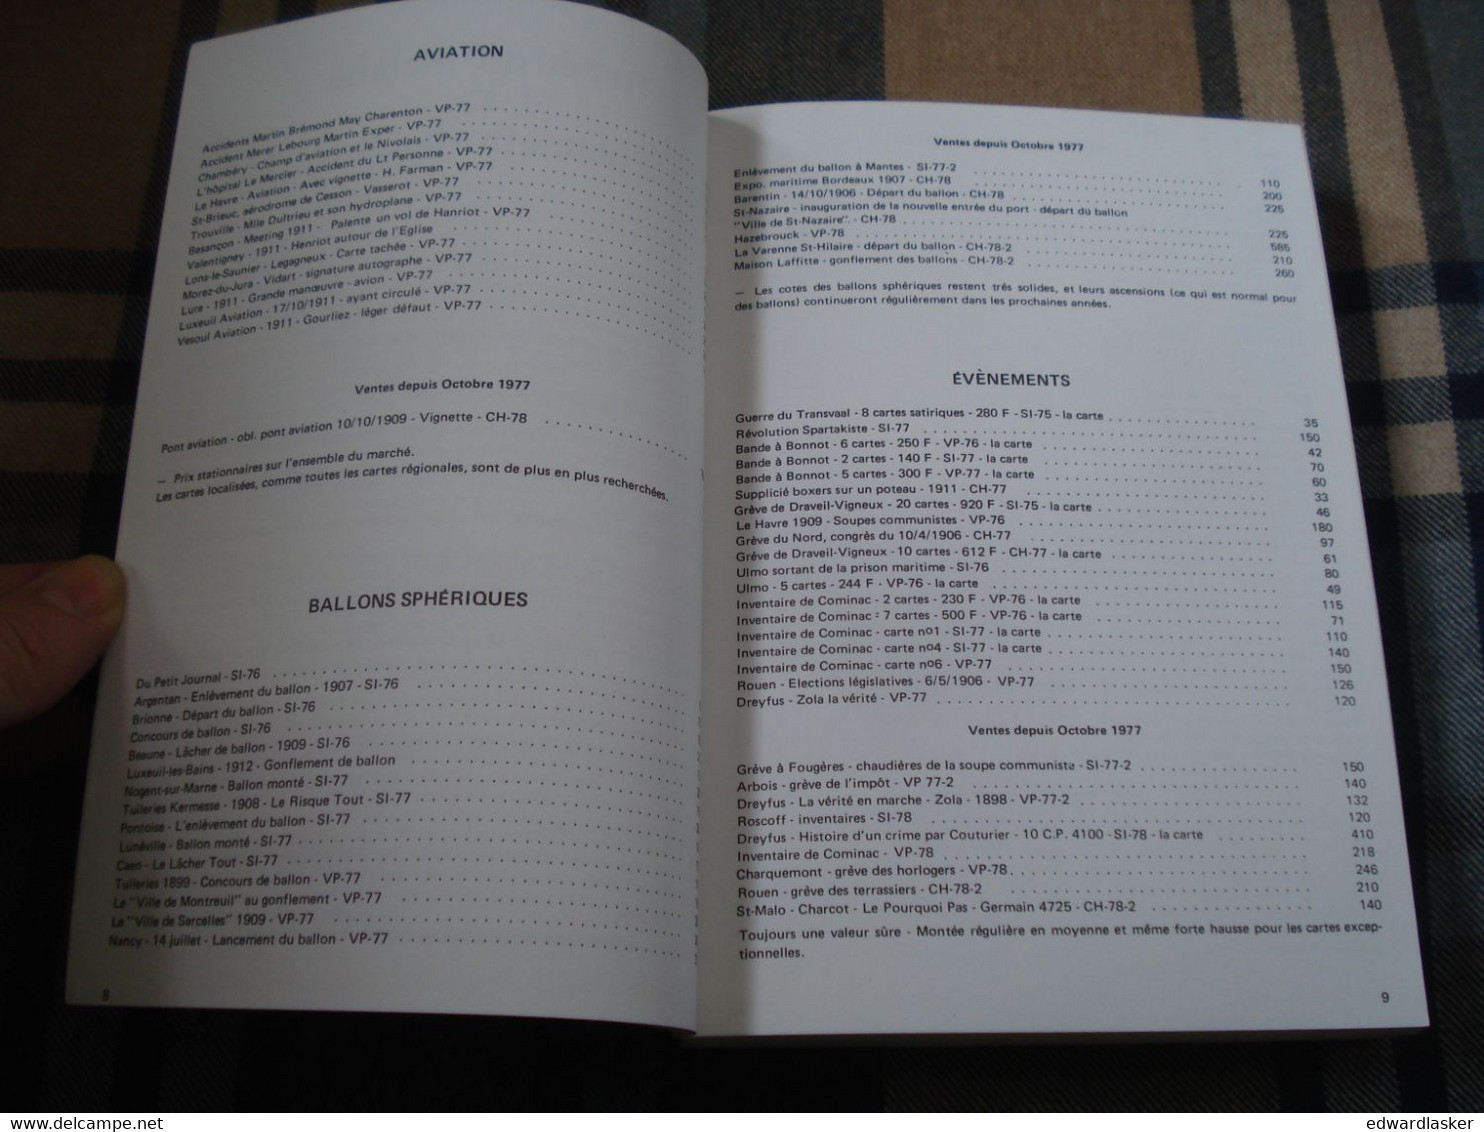 Catalogue FILDIER 1979 (Cartes Postales) - Très Bon état - Libri & Cataloghi